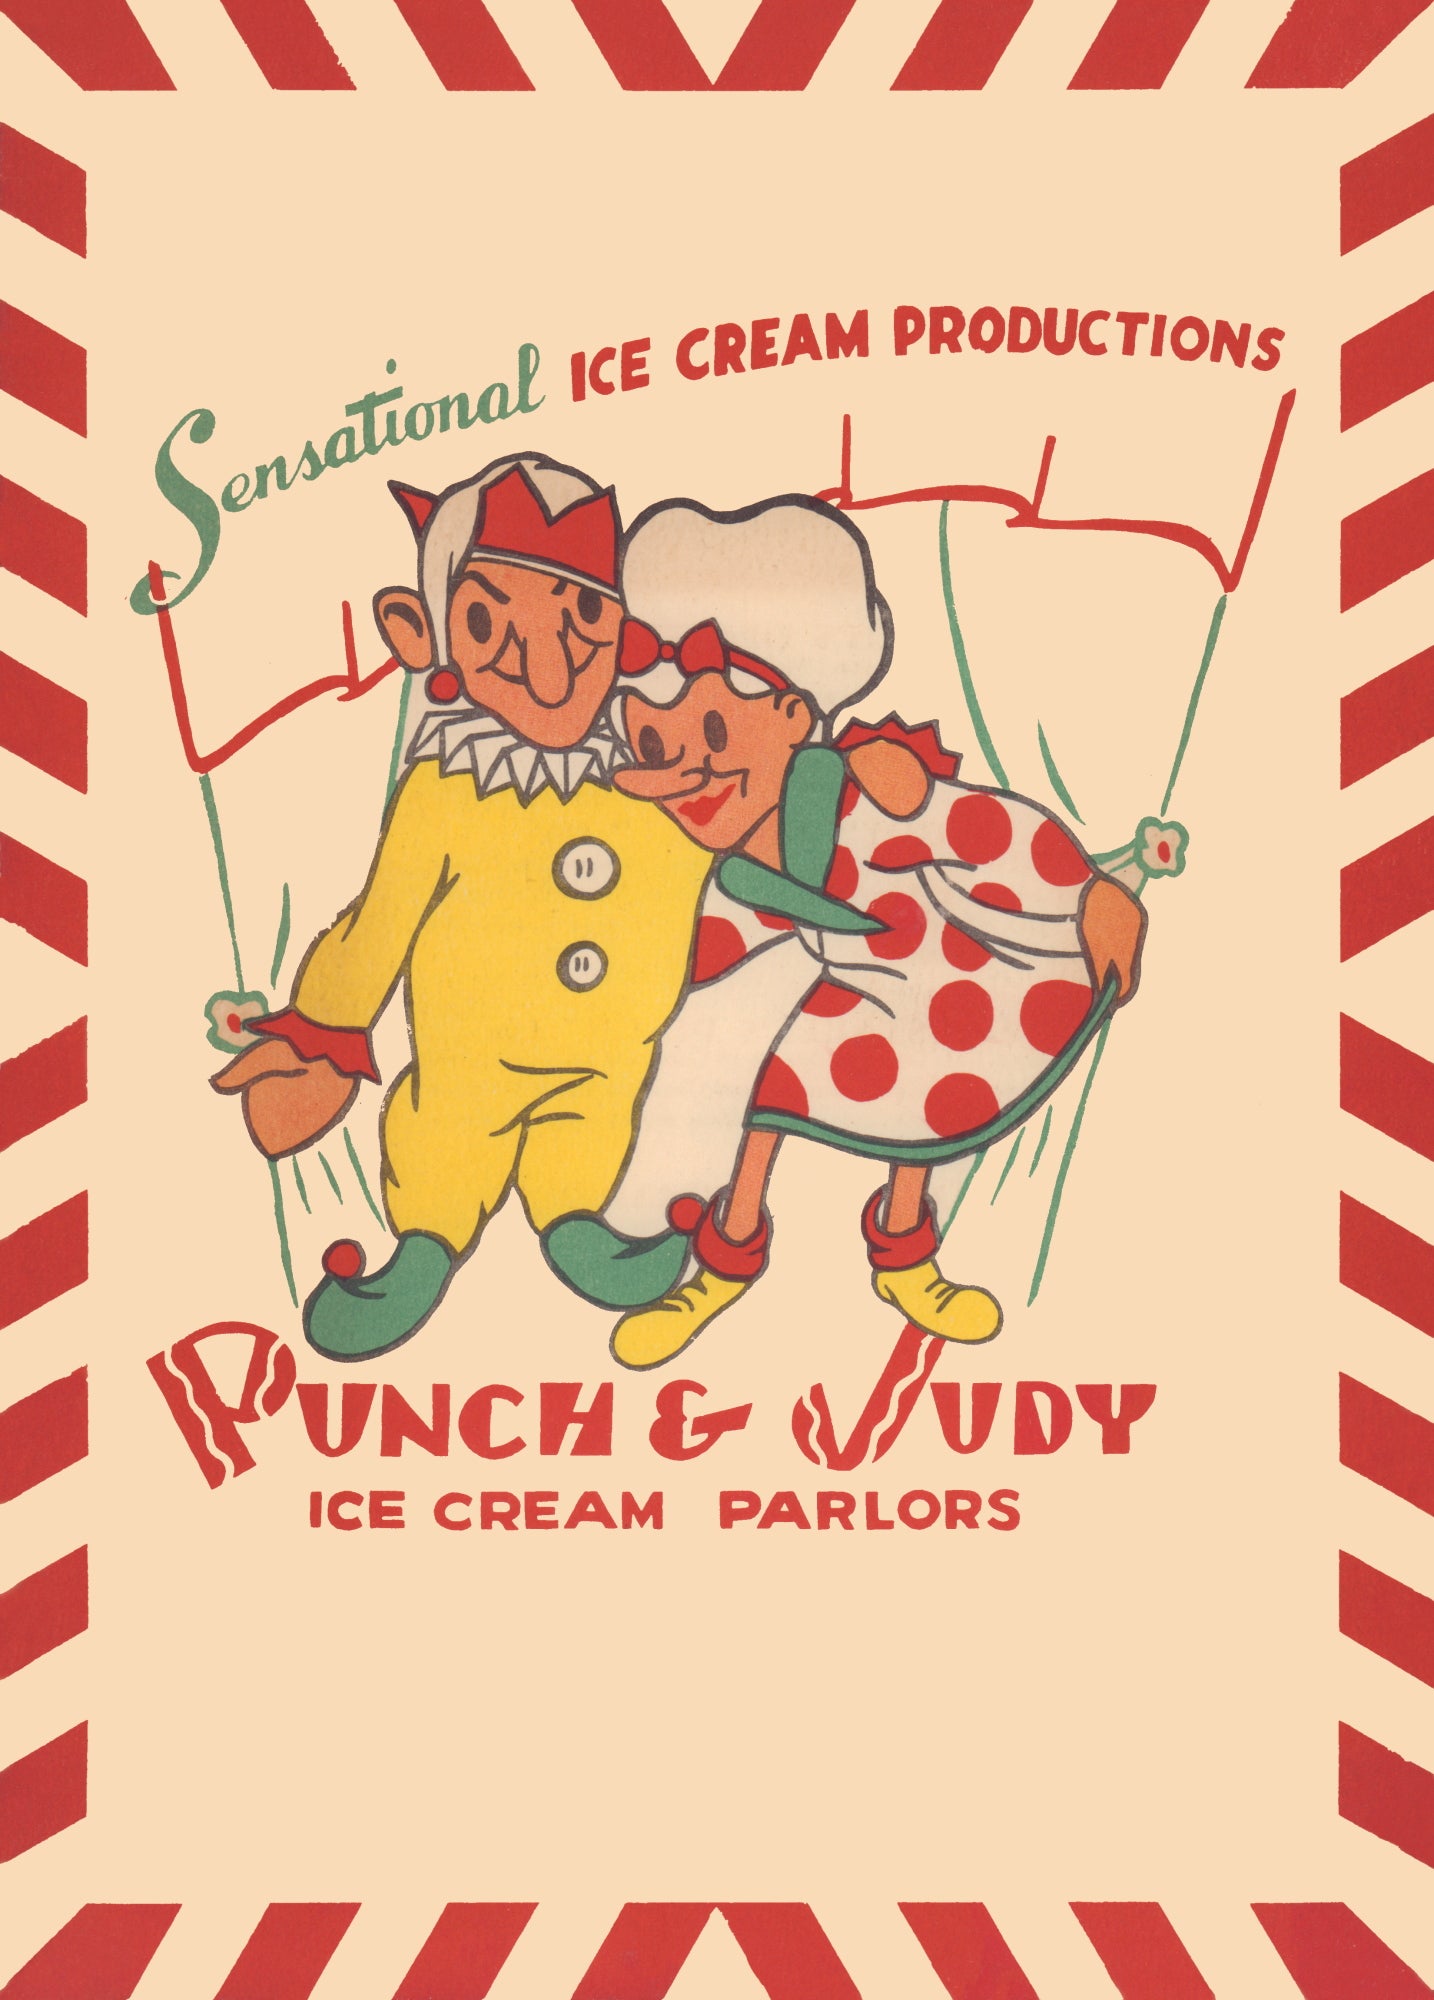 Punch & Judy Ice Cream Parlors. Los Angeles 1949 Menu Art